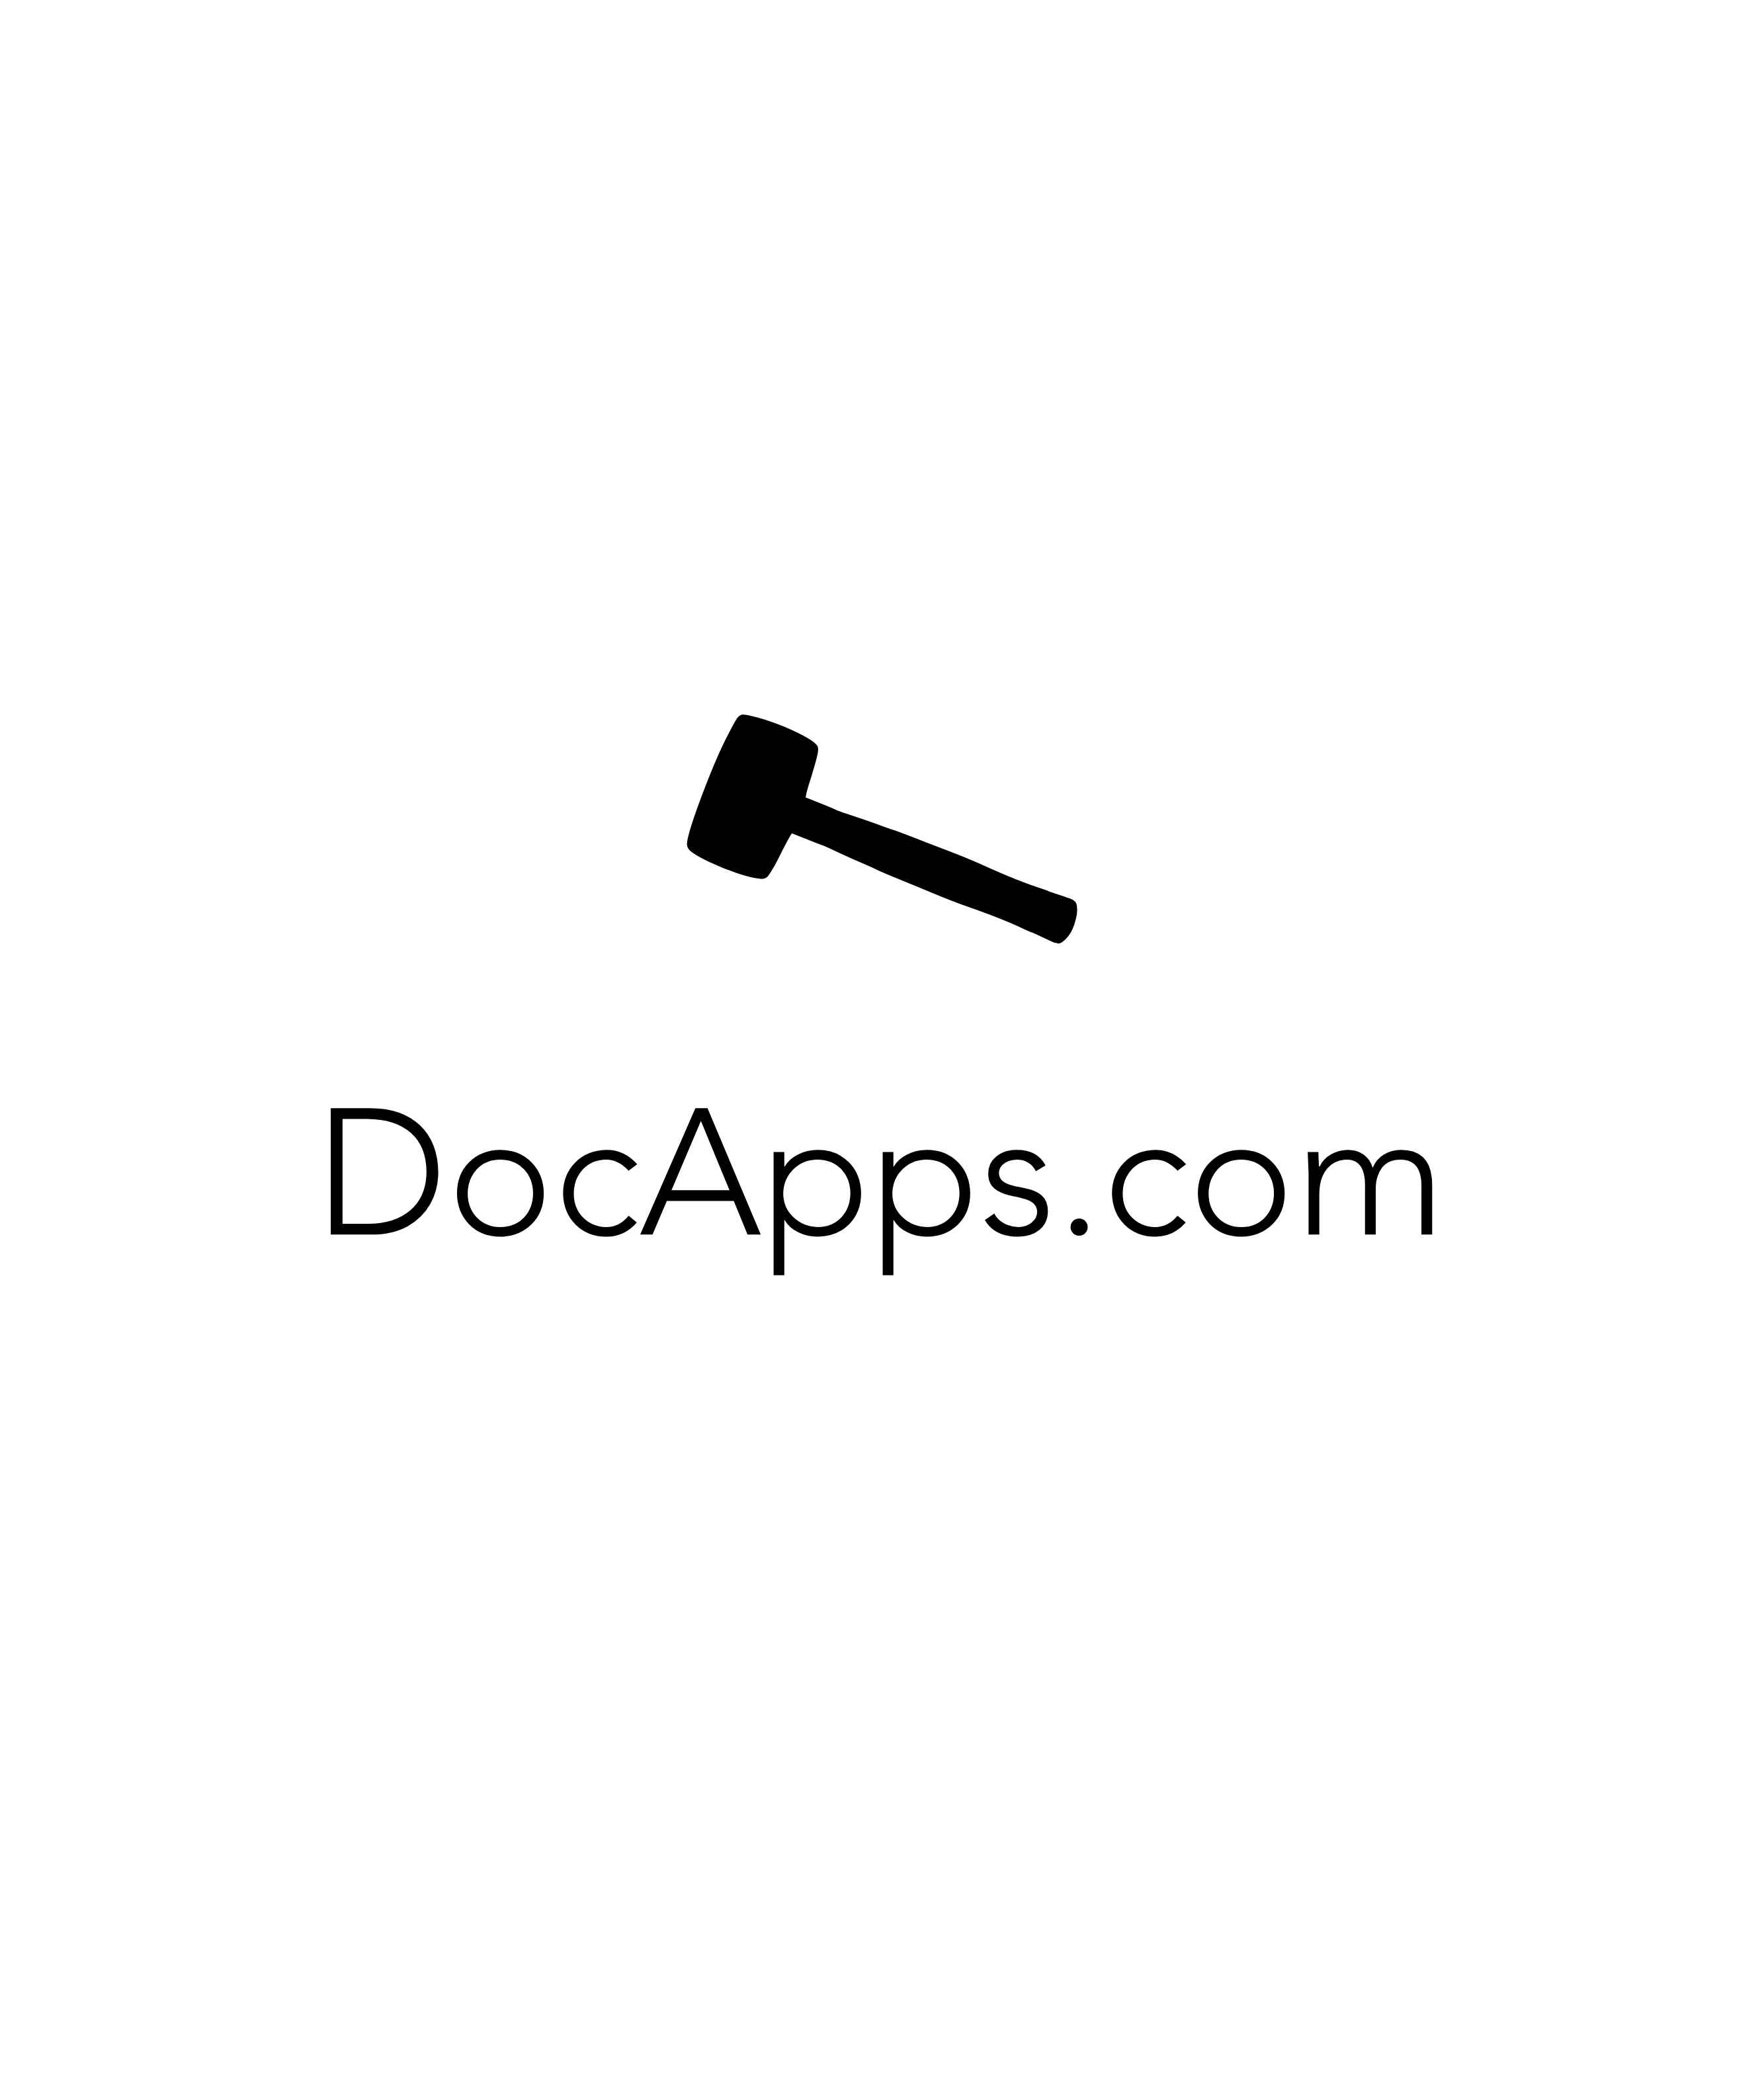 DocApps.com, LLC